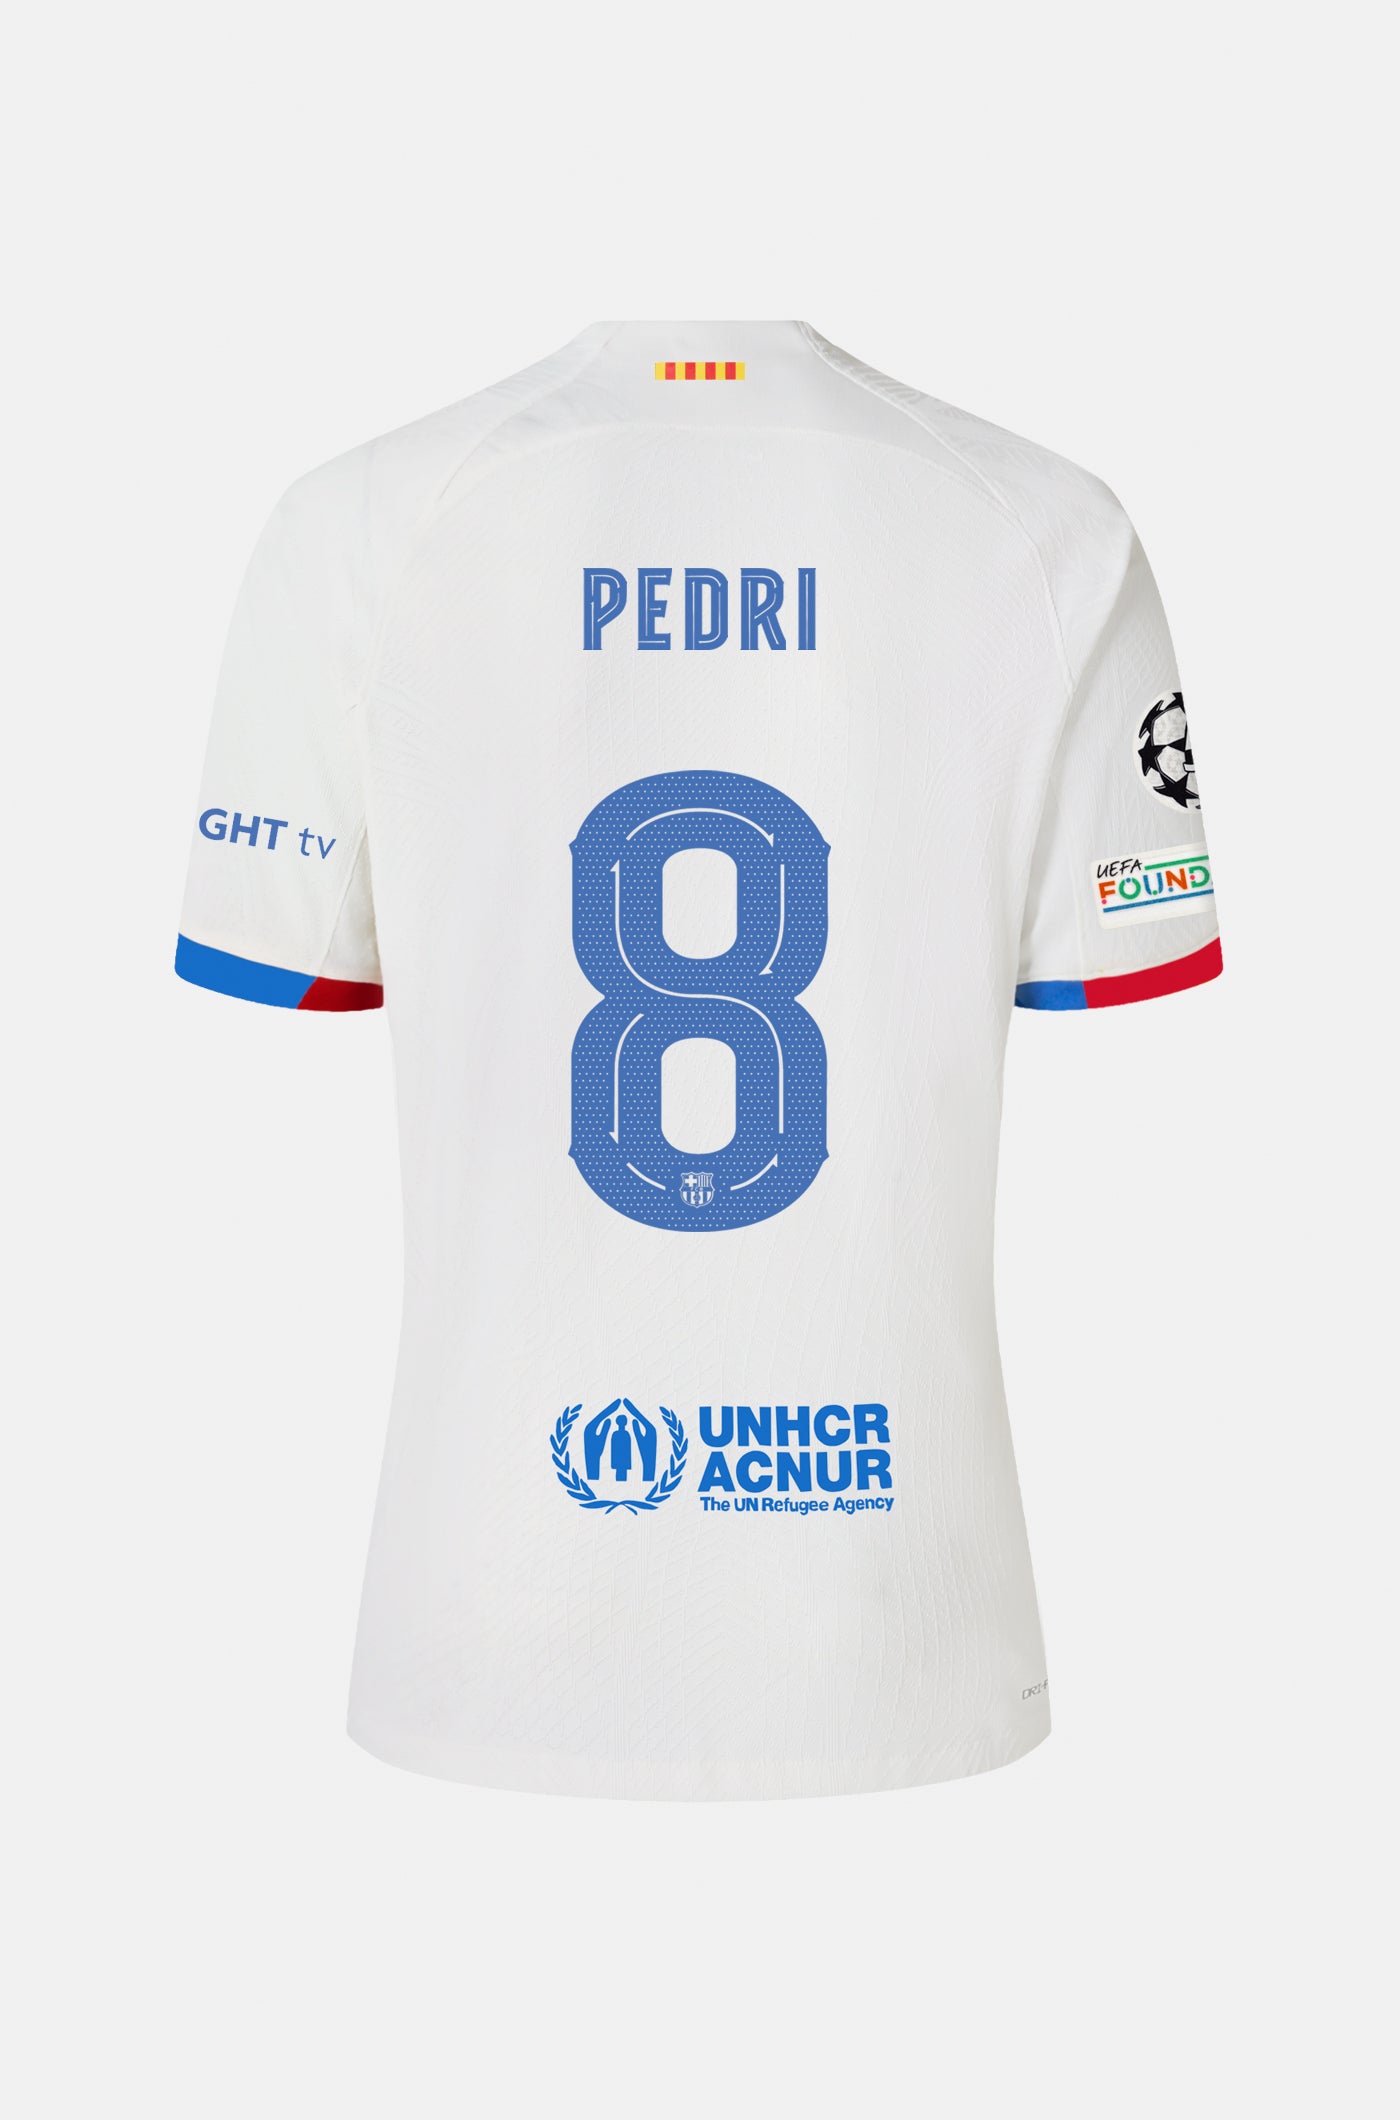 UCL FC Barcelona Away Shirt 23/24 Player’s Edition - Women  - PEDRI